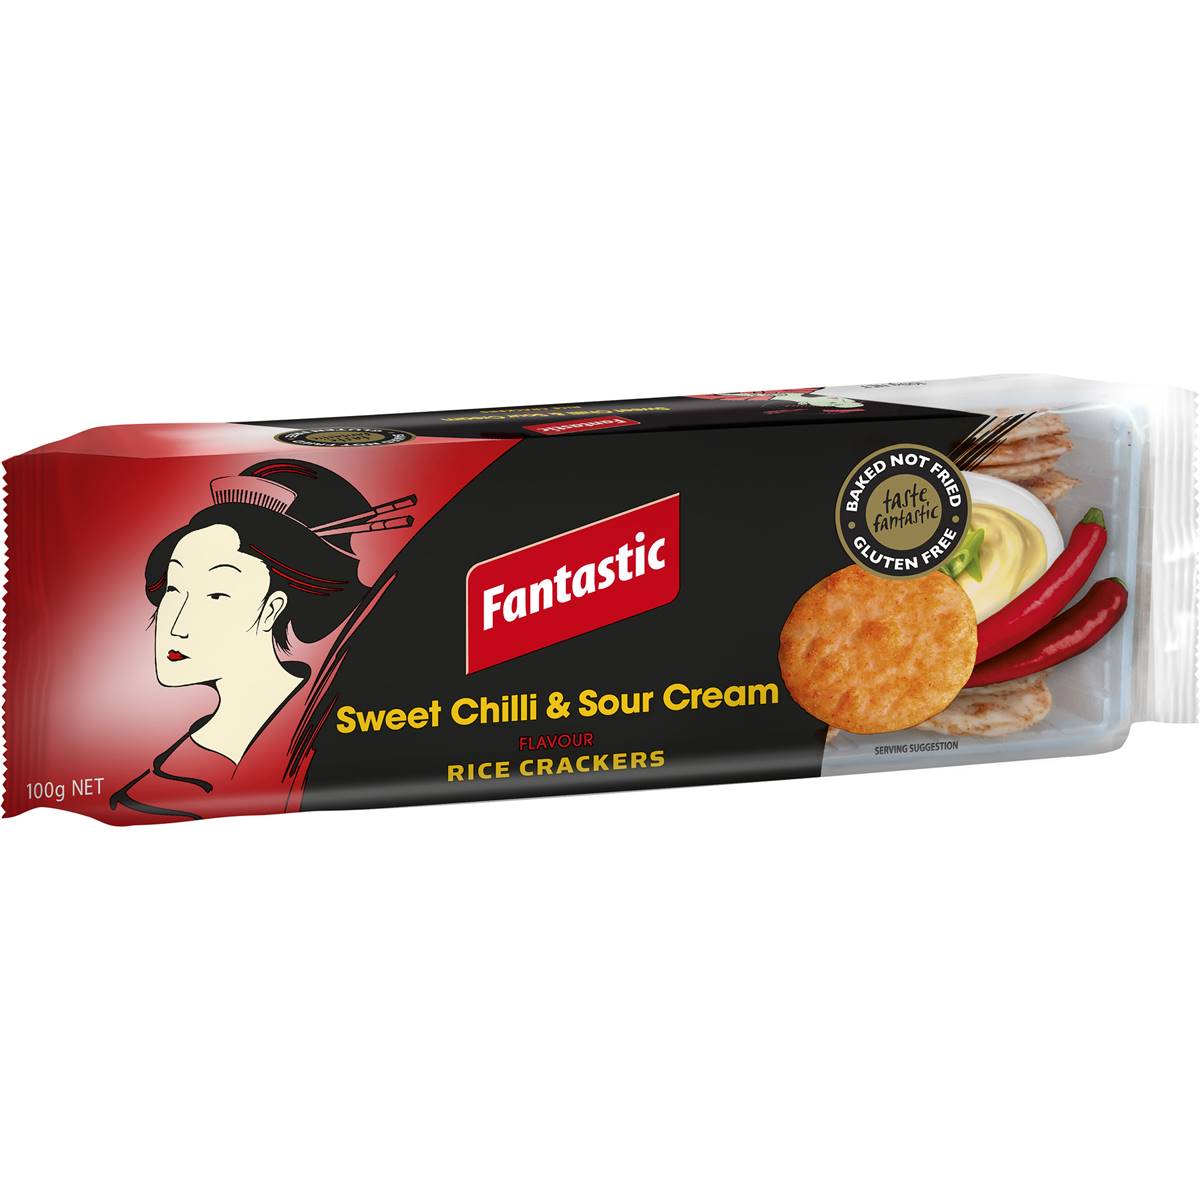 Fantastic Rice Crackers Sweet Chilli & Sour Cream